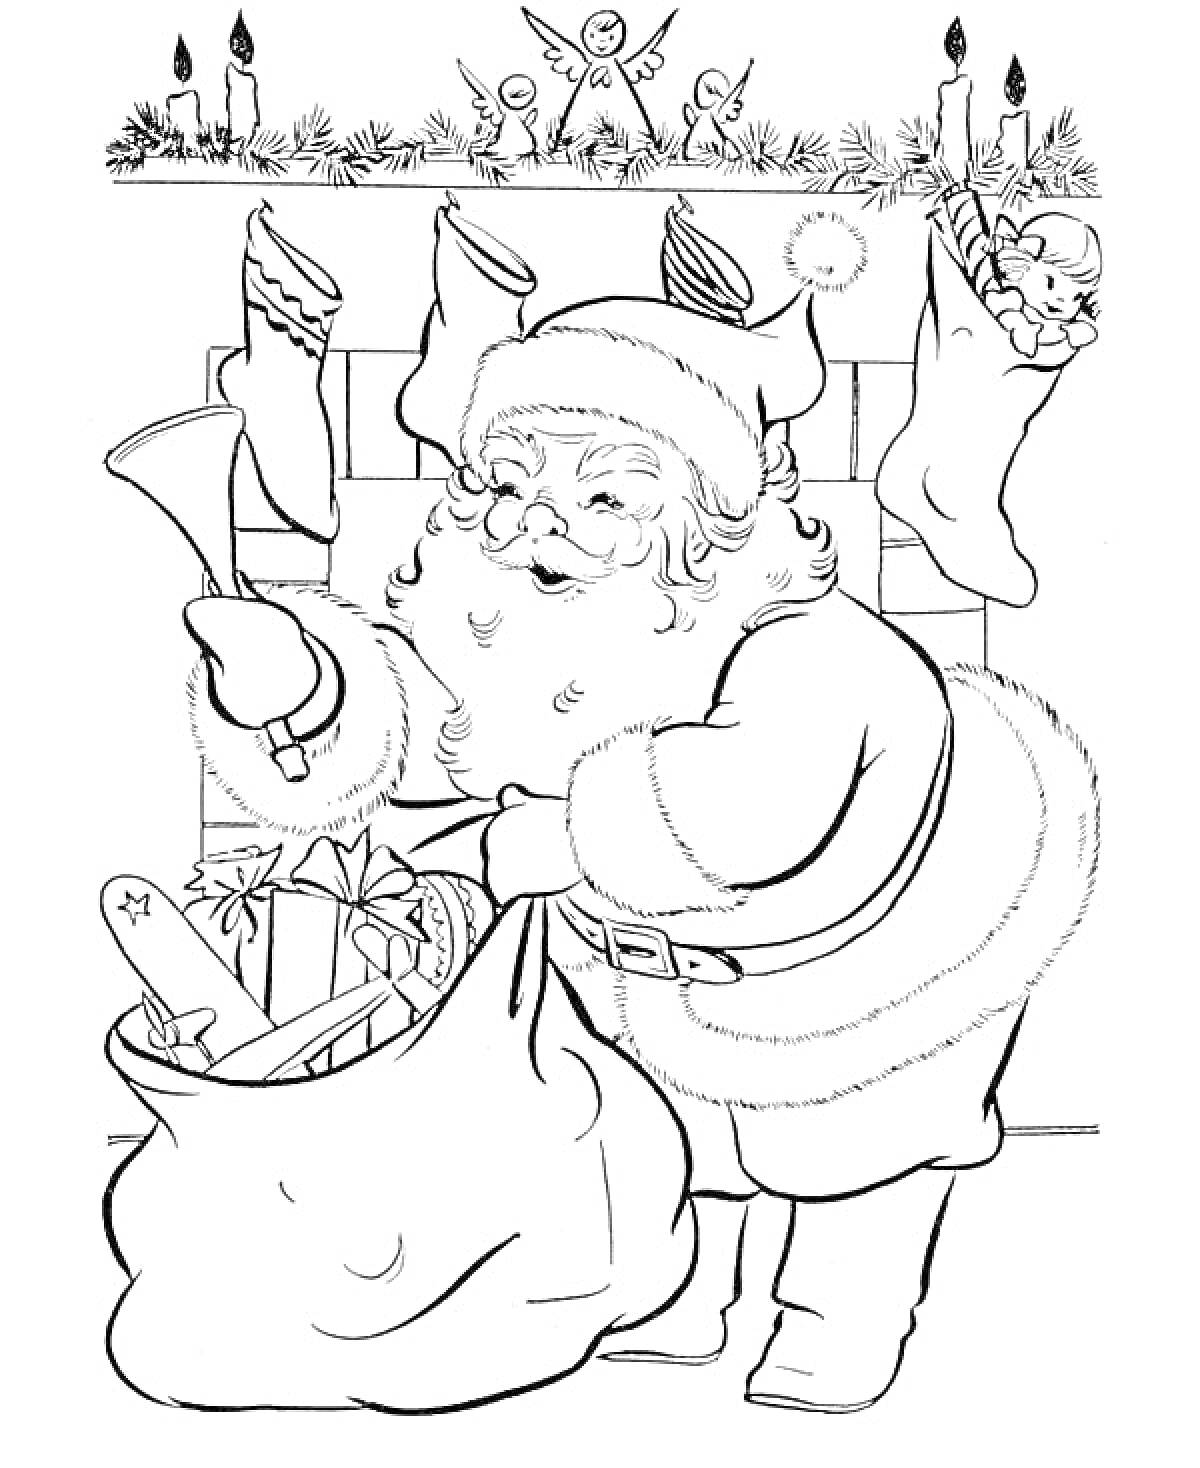 Раскраска Санта Клаус у камина с мешком подарков, носки с подарками и свечи на каминной полке